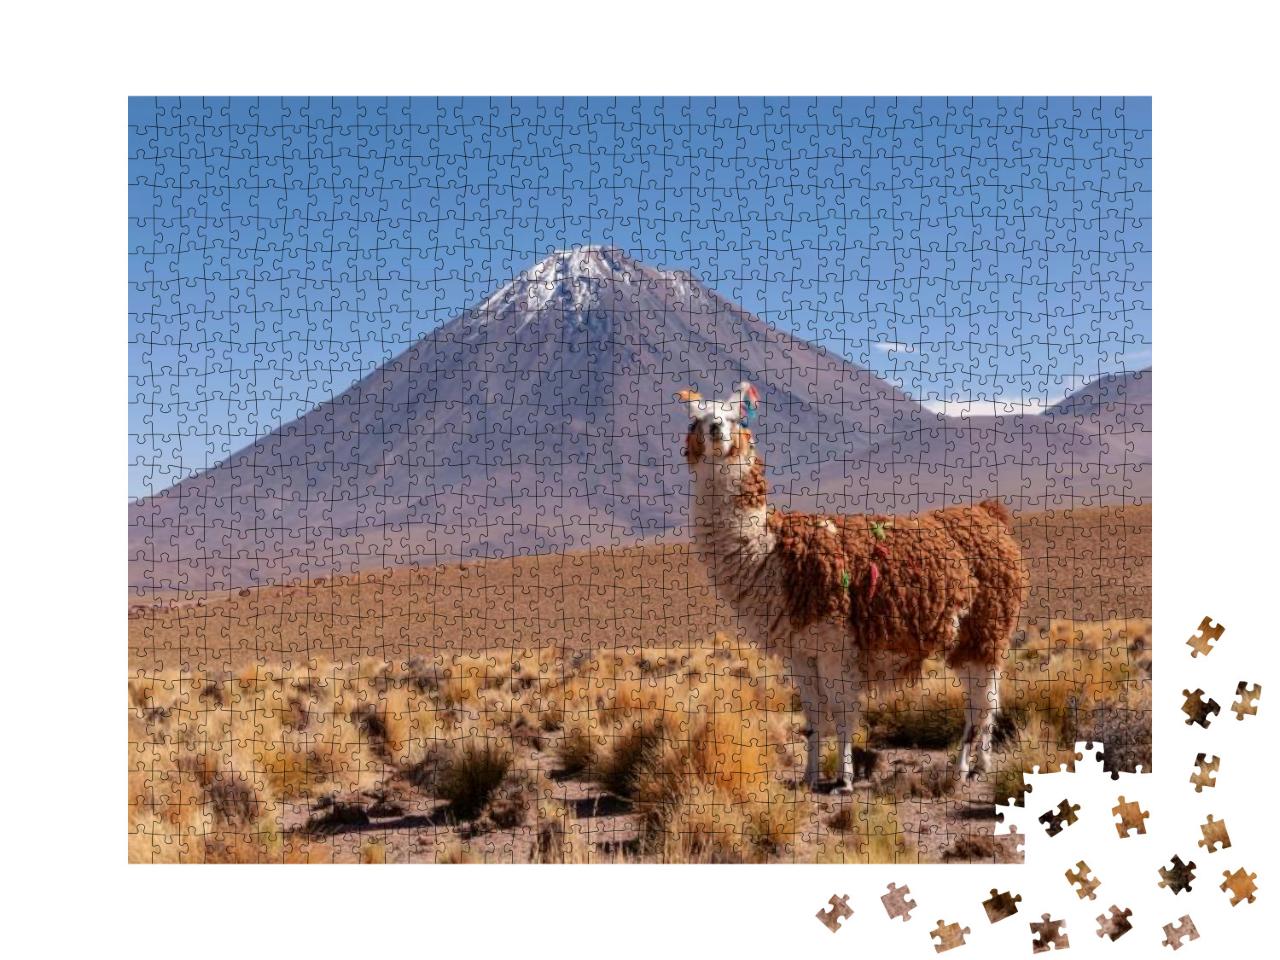 A Llama Lama Glama & Licancabur Volcano in Bolivia - Chil... Jigsaw Puzzle with 1000 pieces